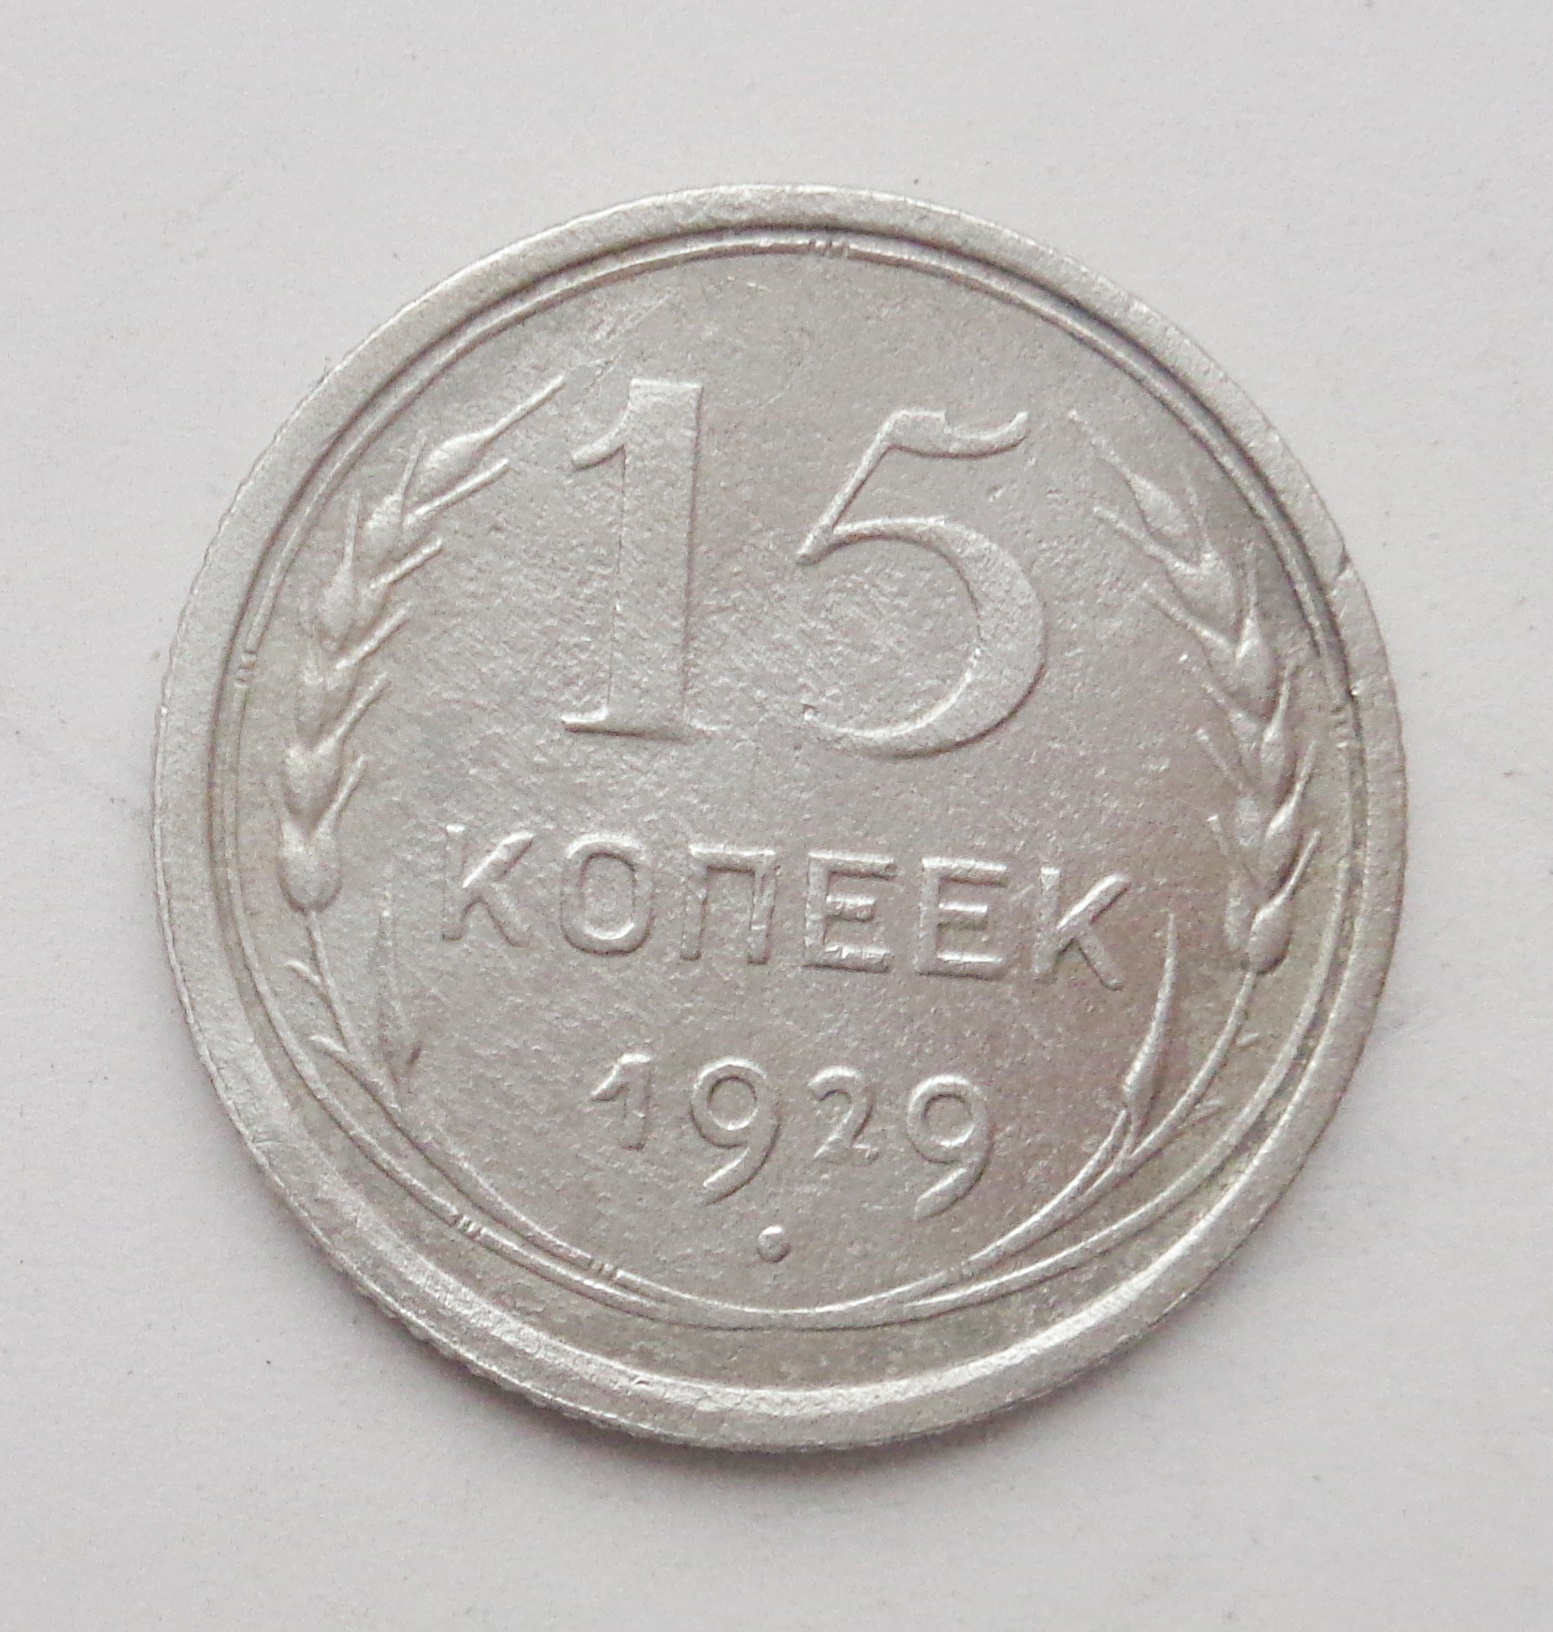 50 Копеек 1929. 50 Копеек 1929 года. Монета с трактором 1929г. 50 Копеек 1929 года фото.